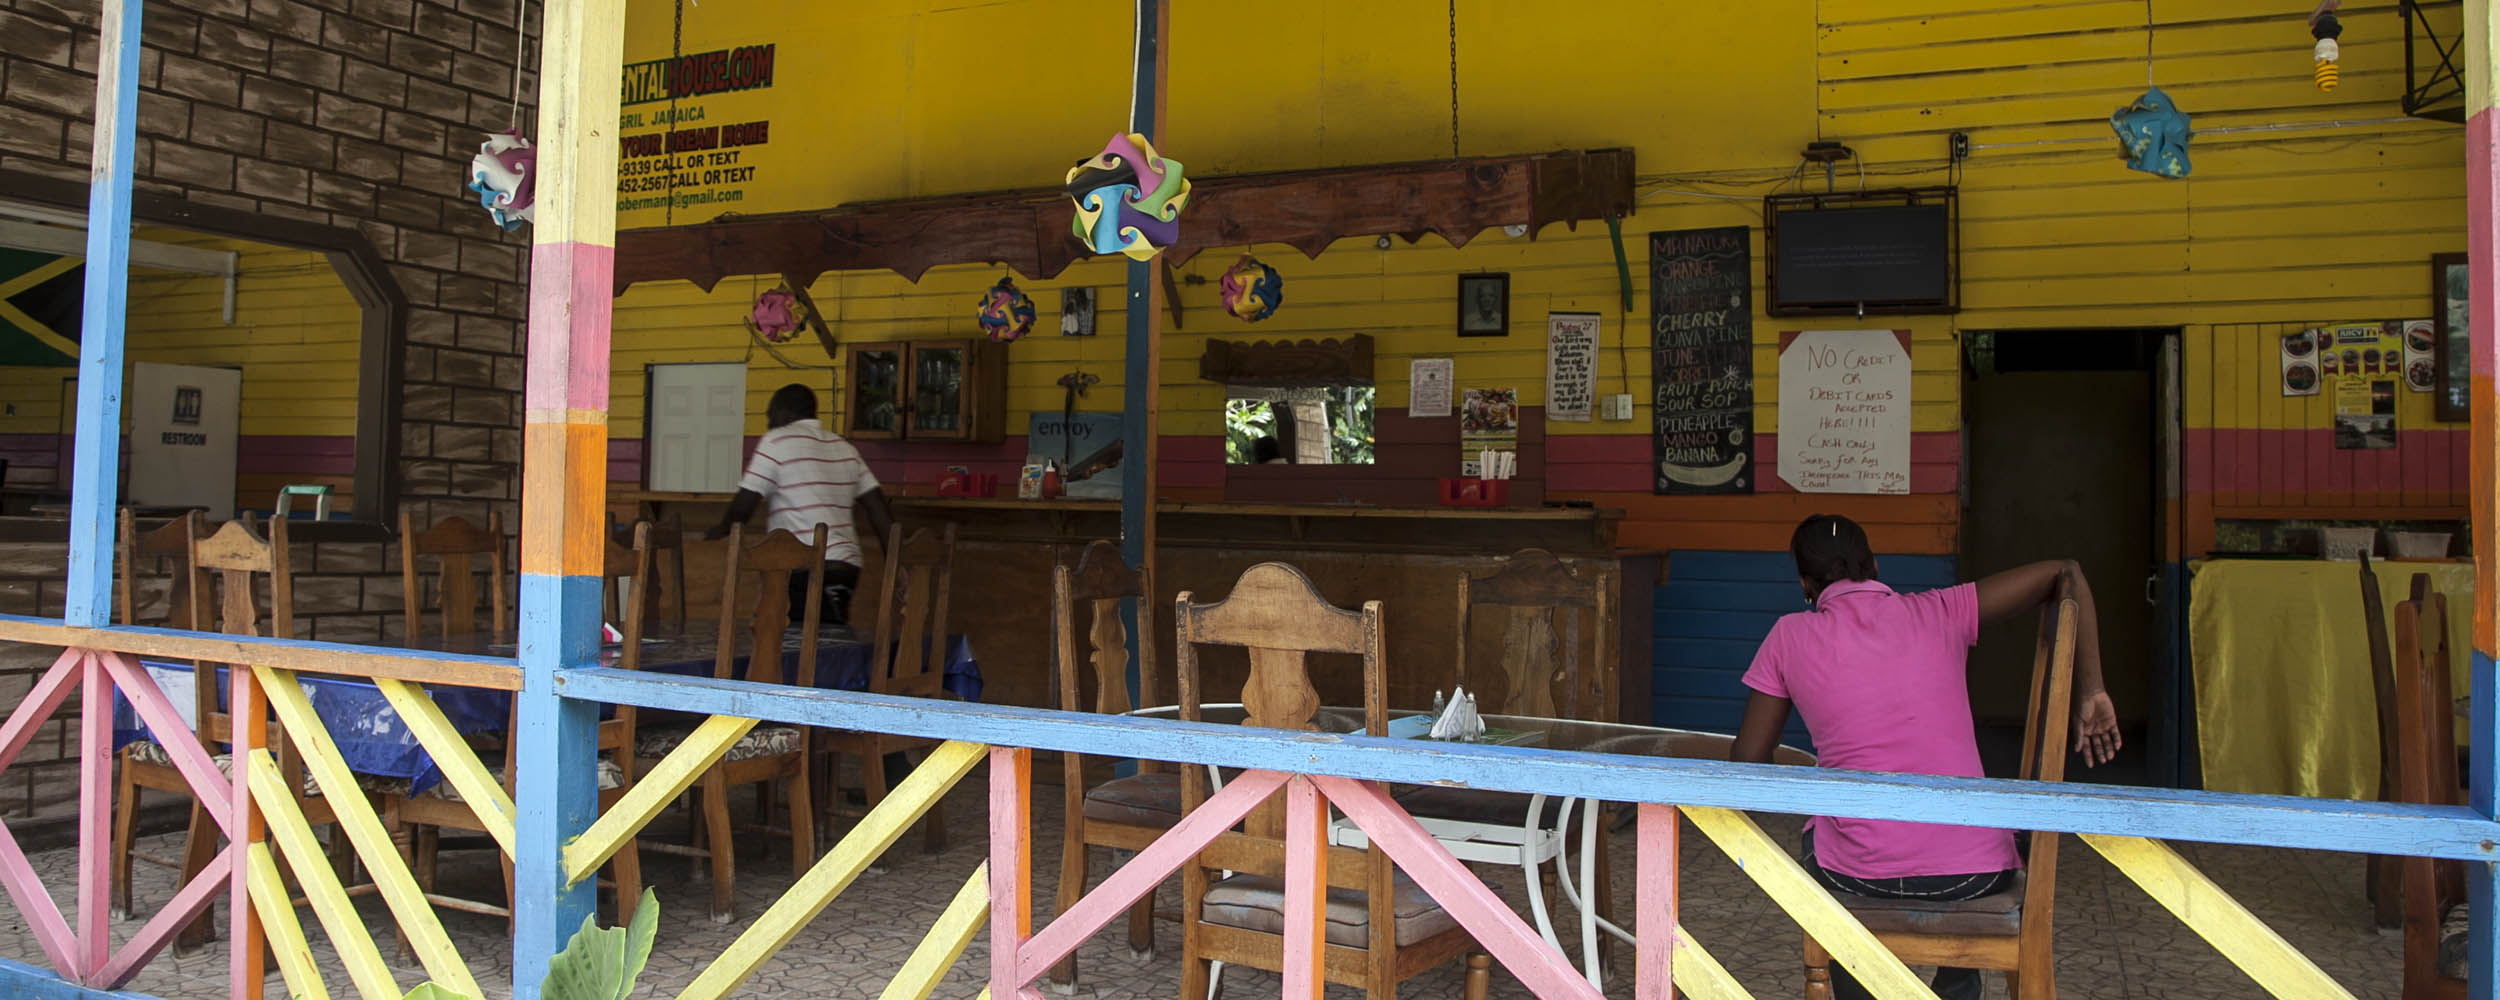 Juicy J's Restaurant, Norman Manley Boulevard, Negril Jamaica